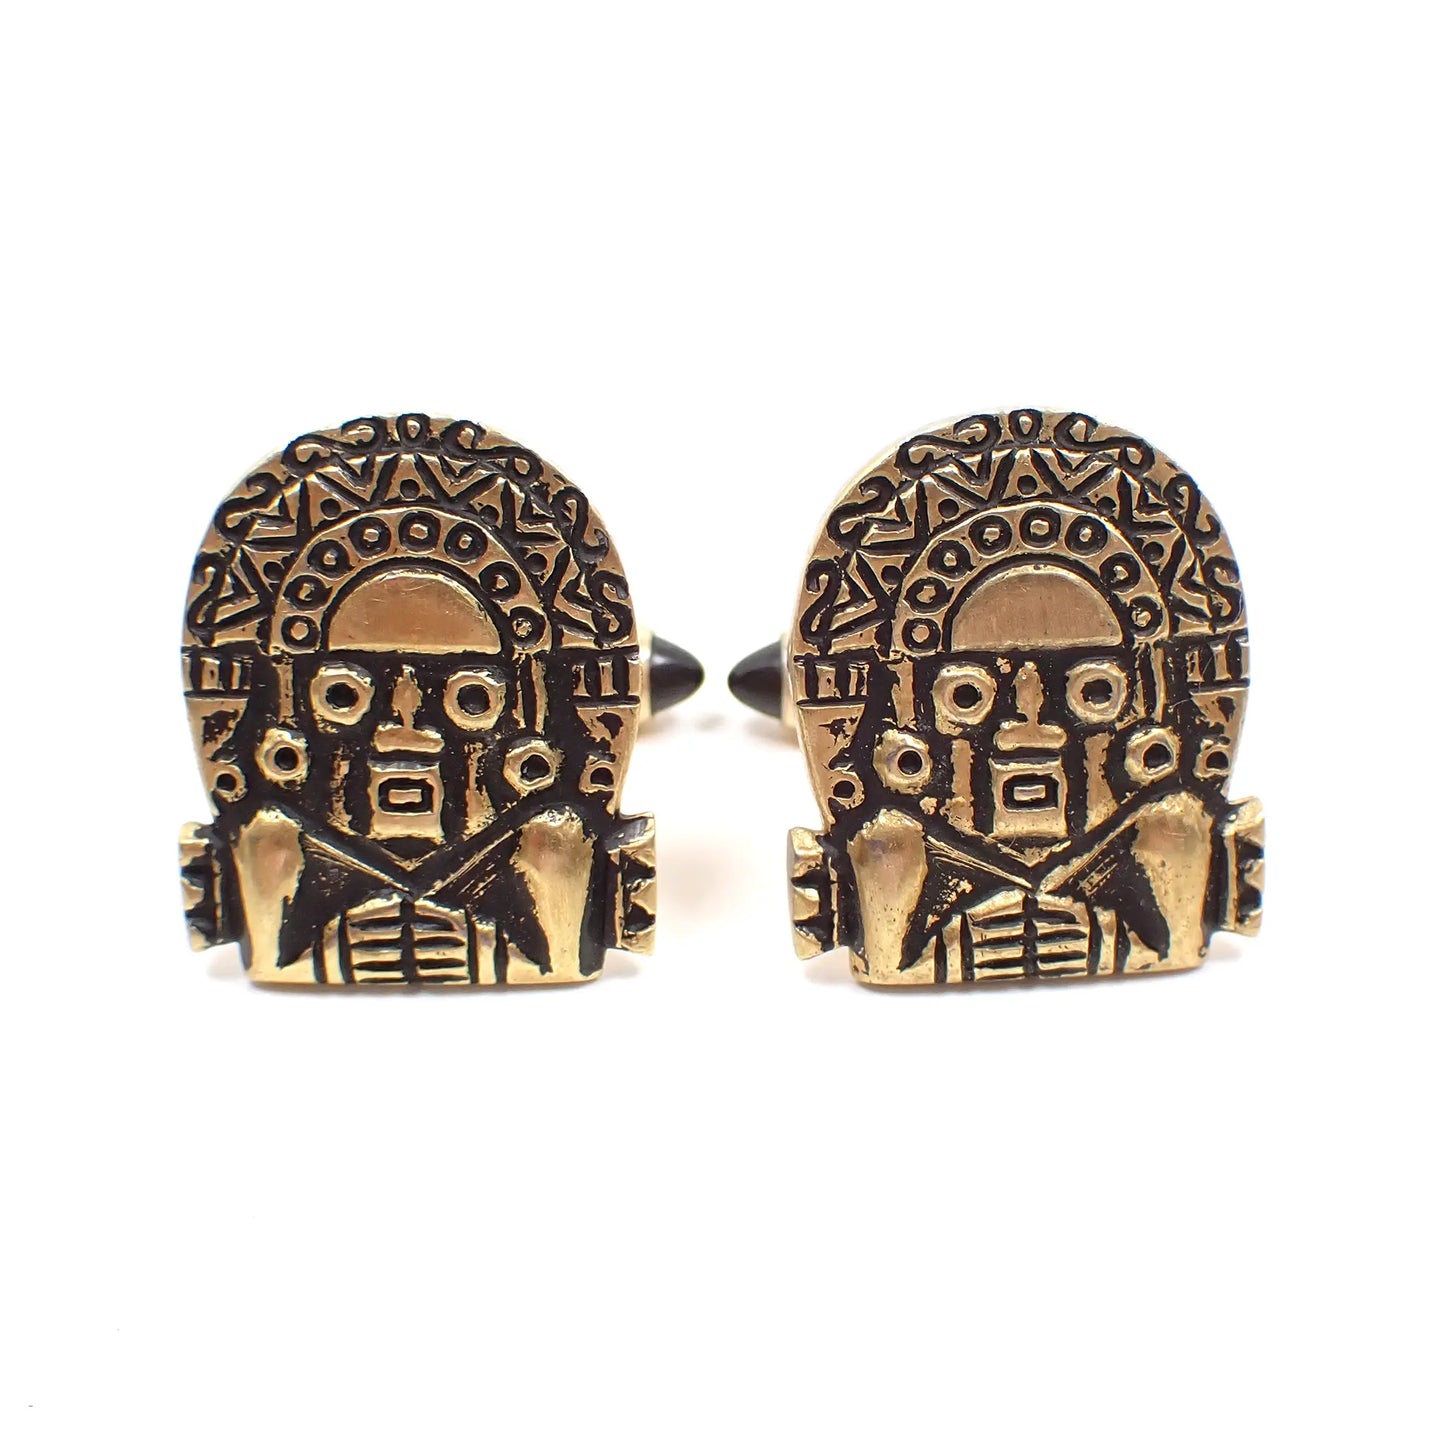 Krementz Aztec Mayan Sun God Vintage Cufflinks, Antiqued Gold Tone Bullet Back Cuff Links with Black Lucite Ends